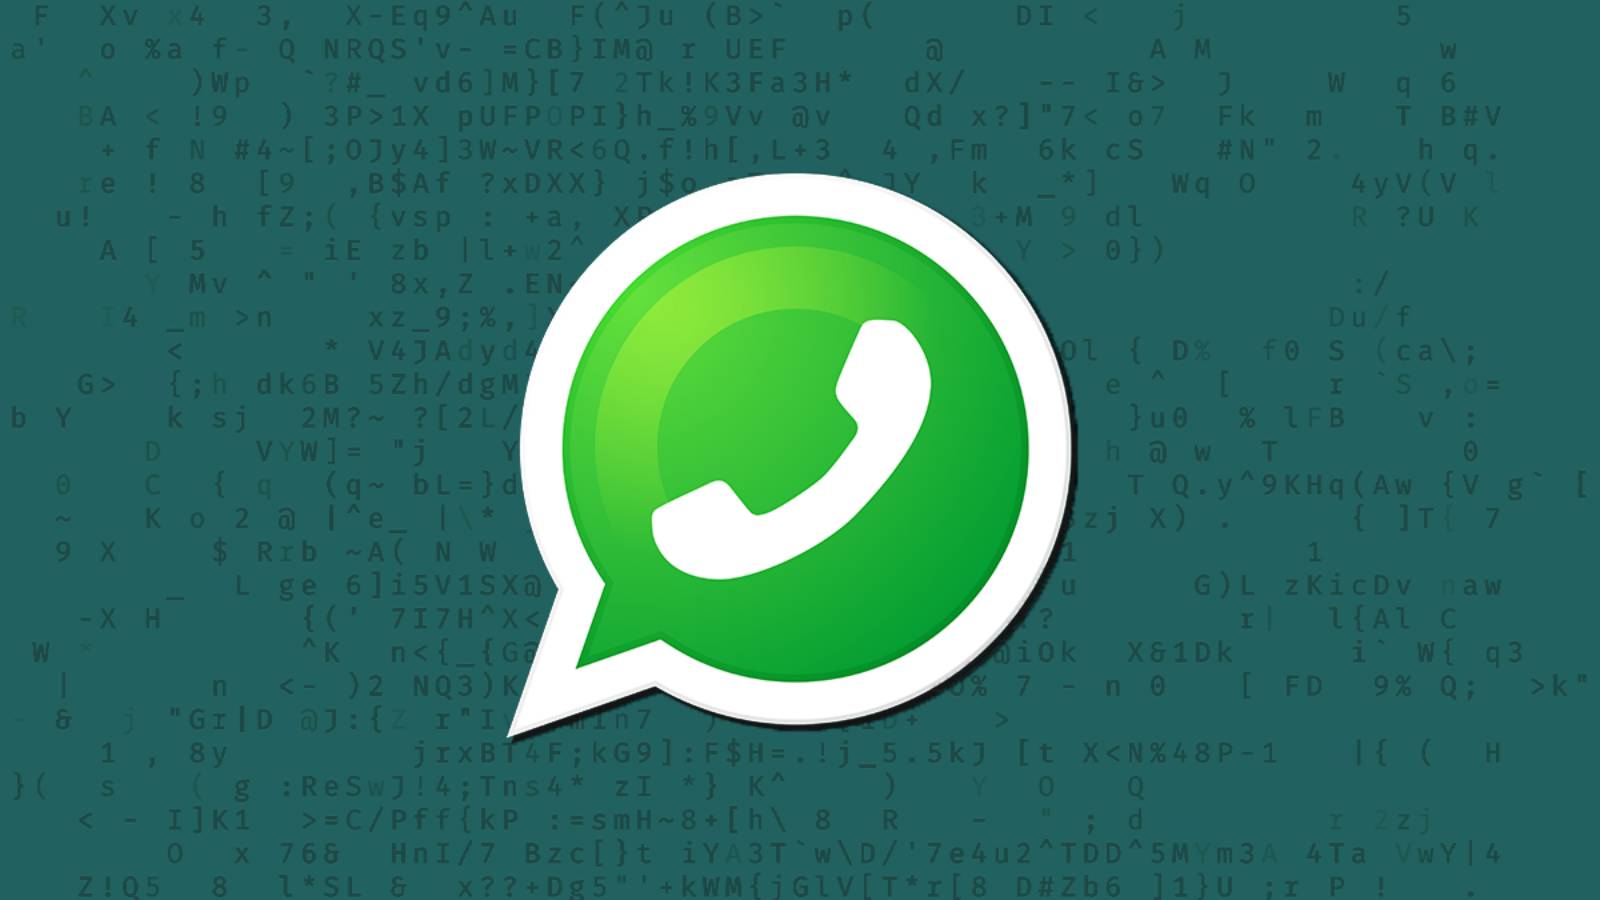 WhatsApp URIASA Schimbare Adusa Direct Facebook Messenger